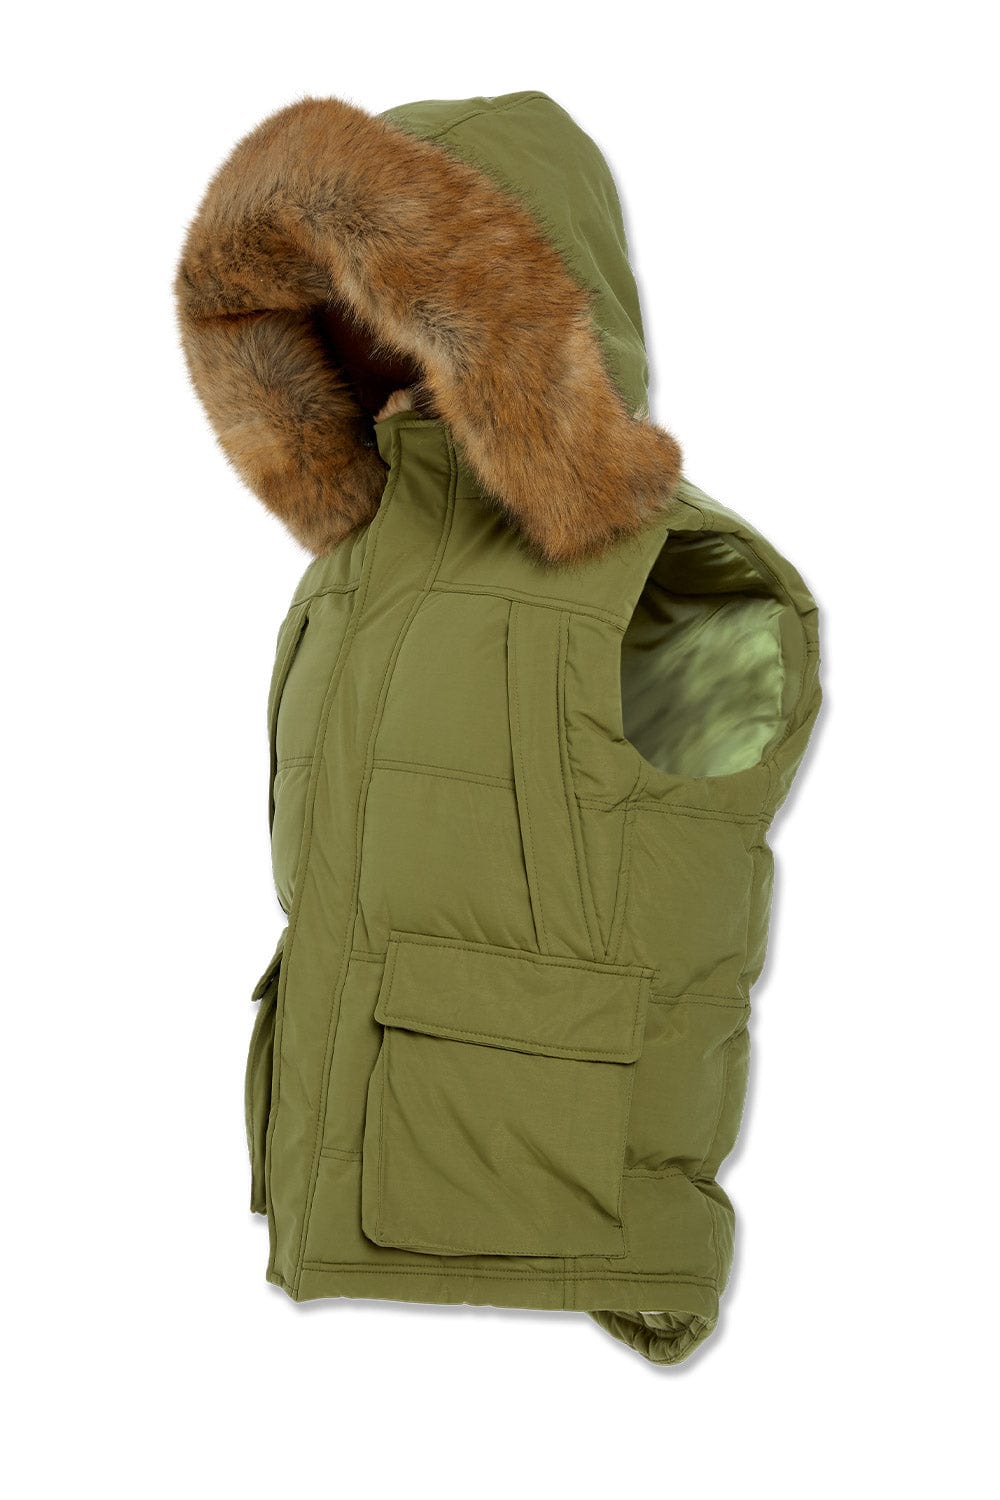 Jordan Craig Yukon Fur Lined Puffer Vest (Army Green)